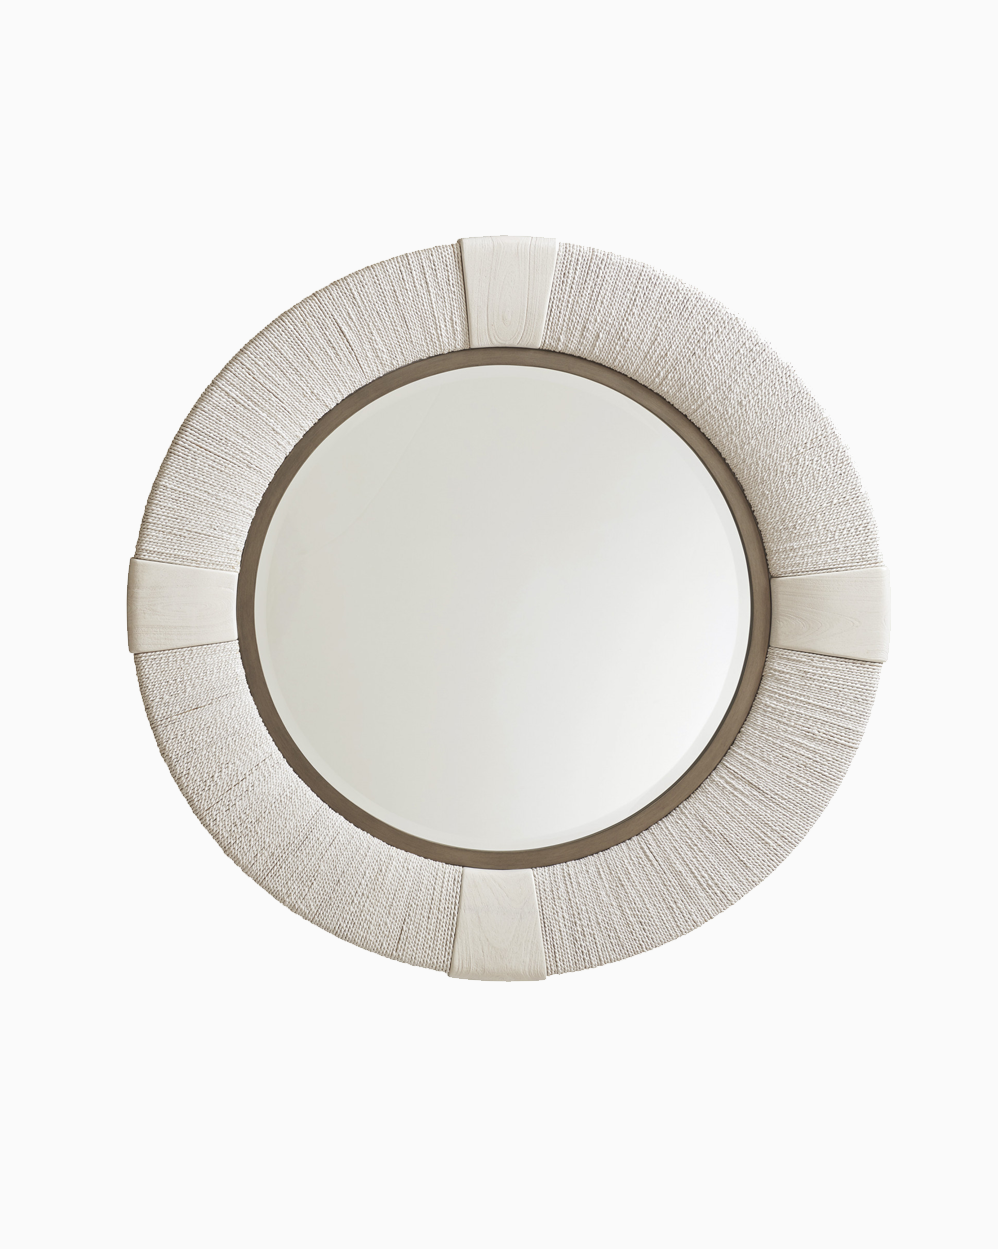 Seacroft Round Mirror